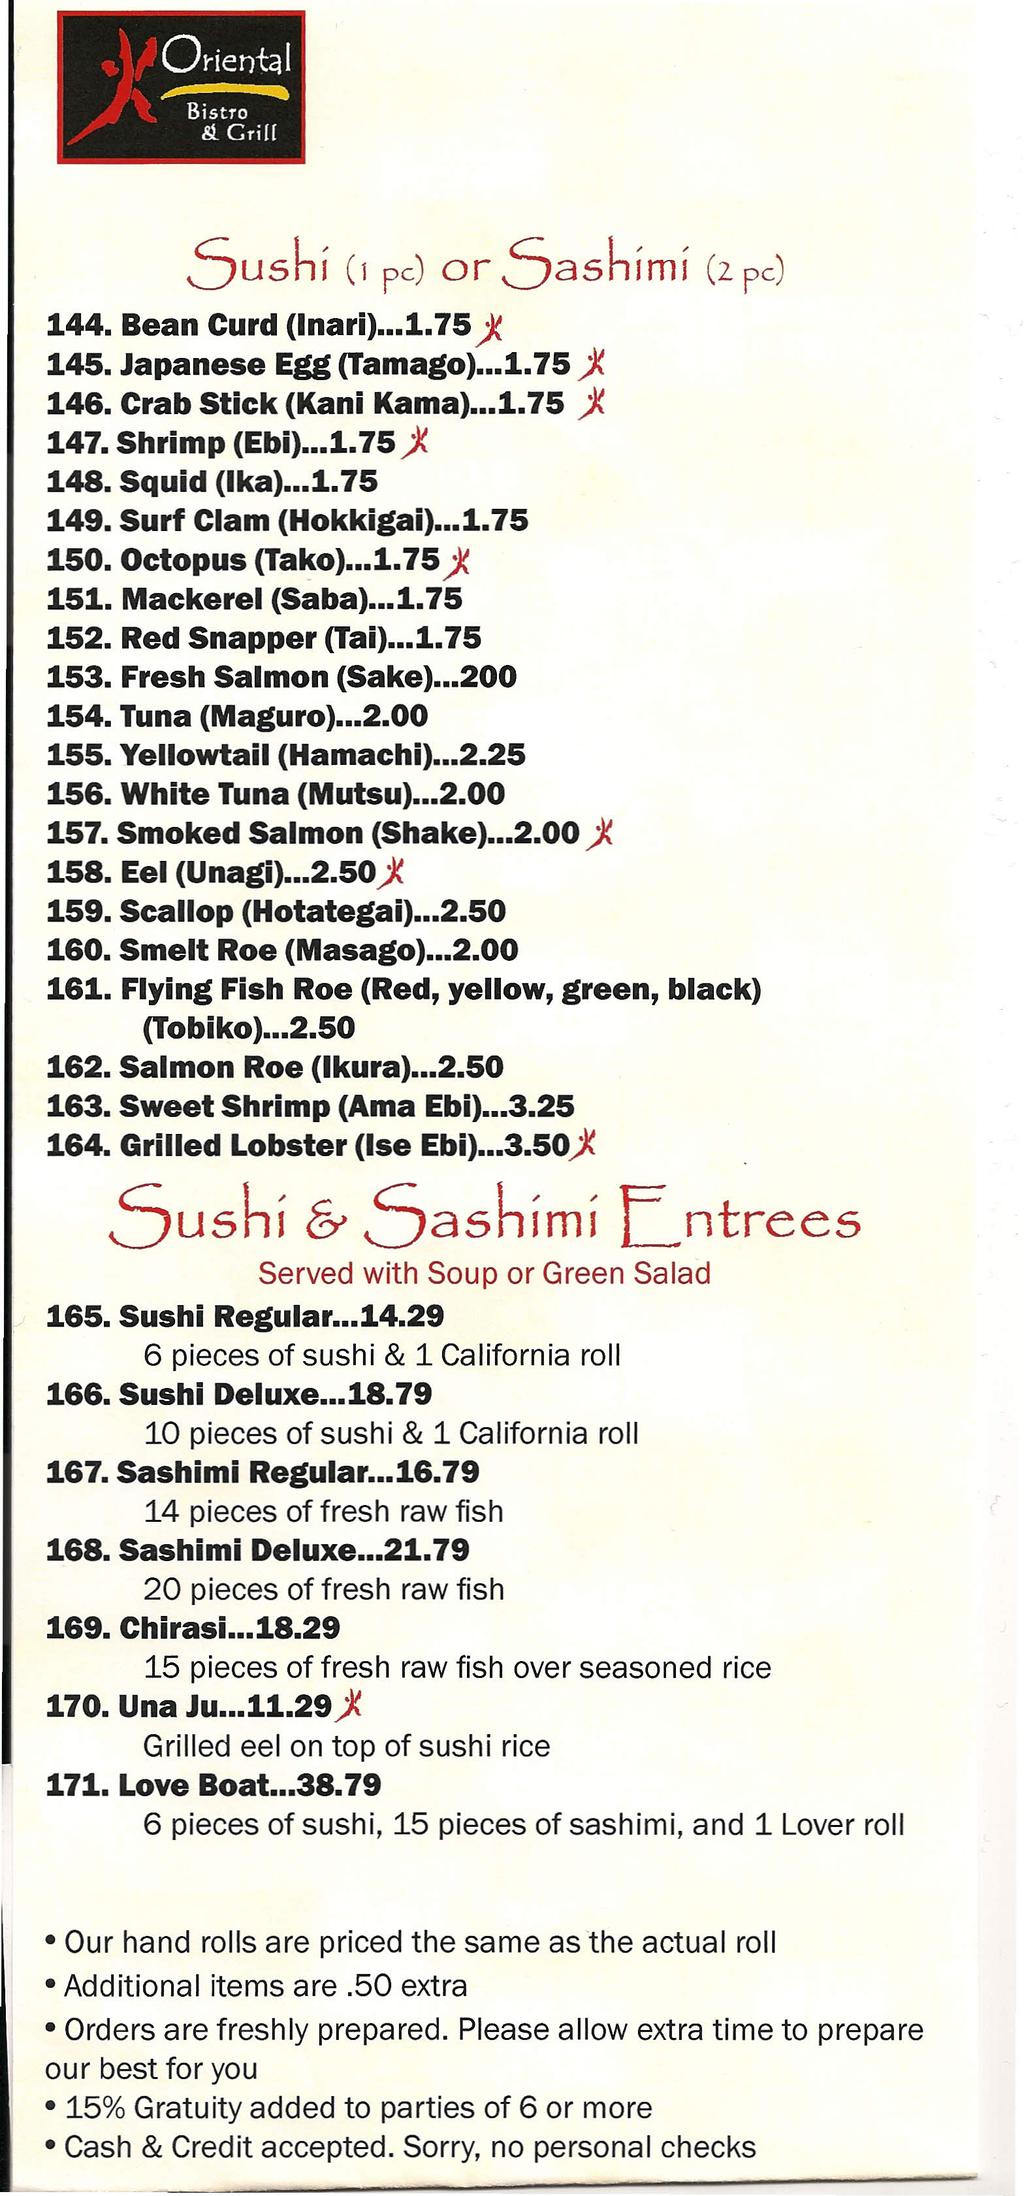 Ot"ientql ~ Bistro & c-ut Sushi (1 pc) or Sashimi (2 pc) 144. Bean Curd (lnari)...l. 75J 145. Japanese Egg (Tamago) 1.75 J 146. Crab Stick (Kani Kama) 1.75 J 147. Shrimp (Ebi) 1.75 J 148.